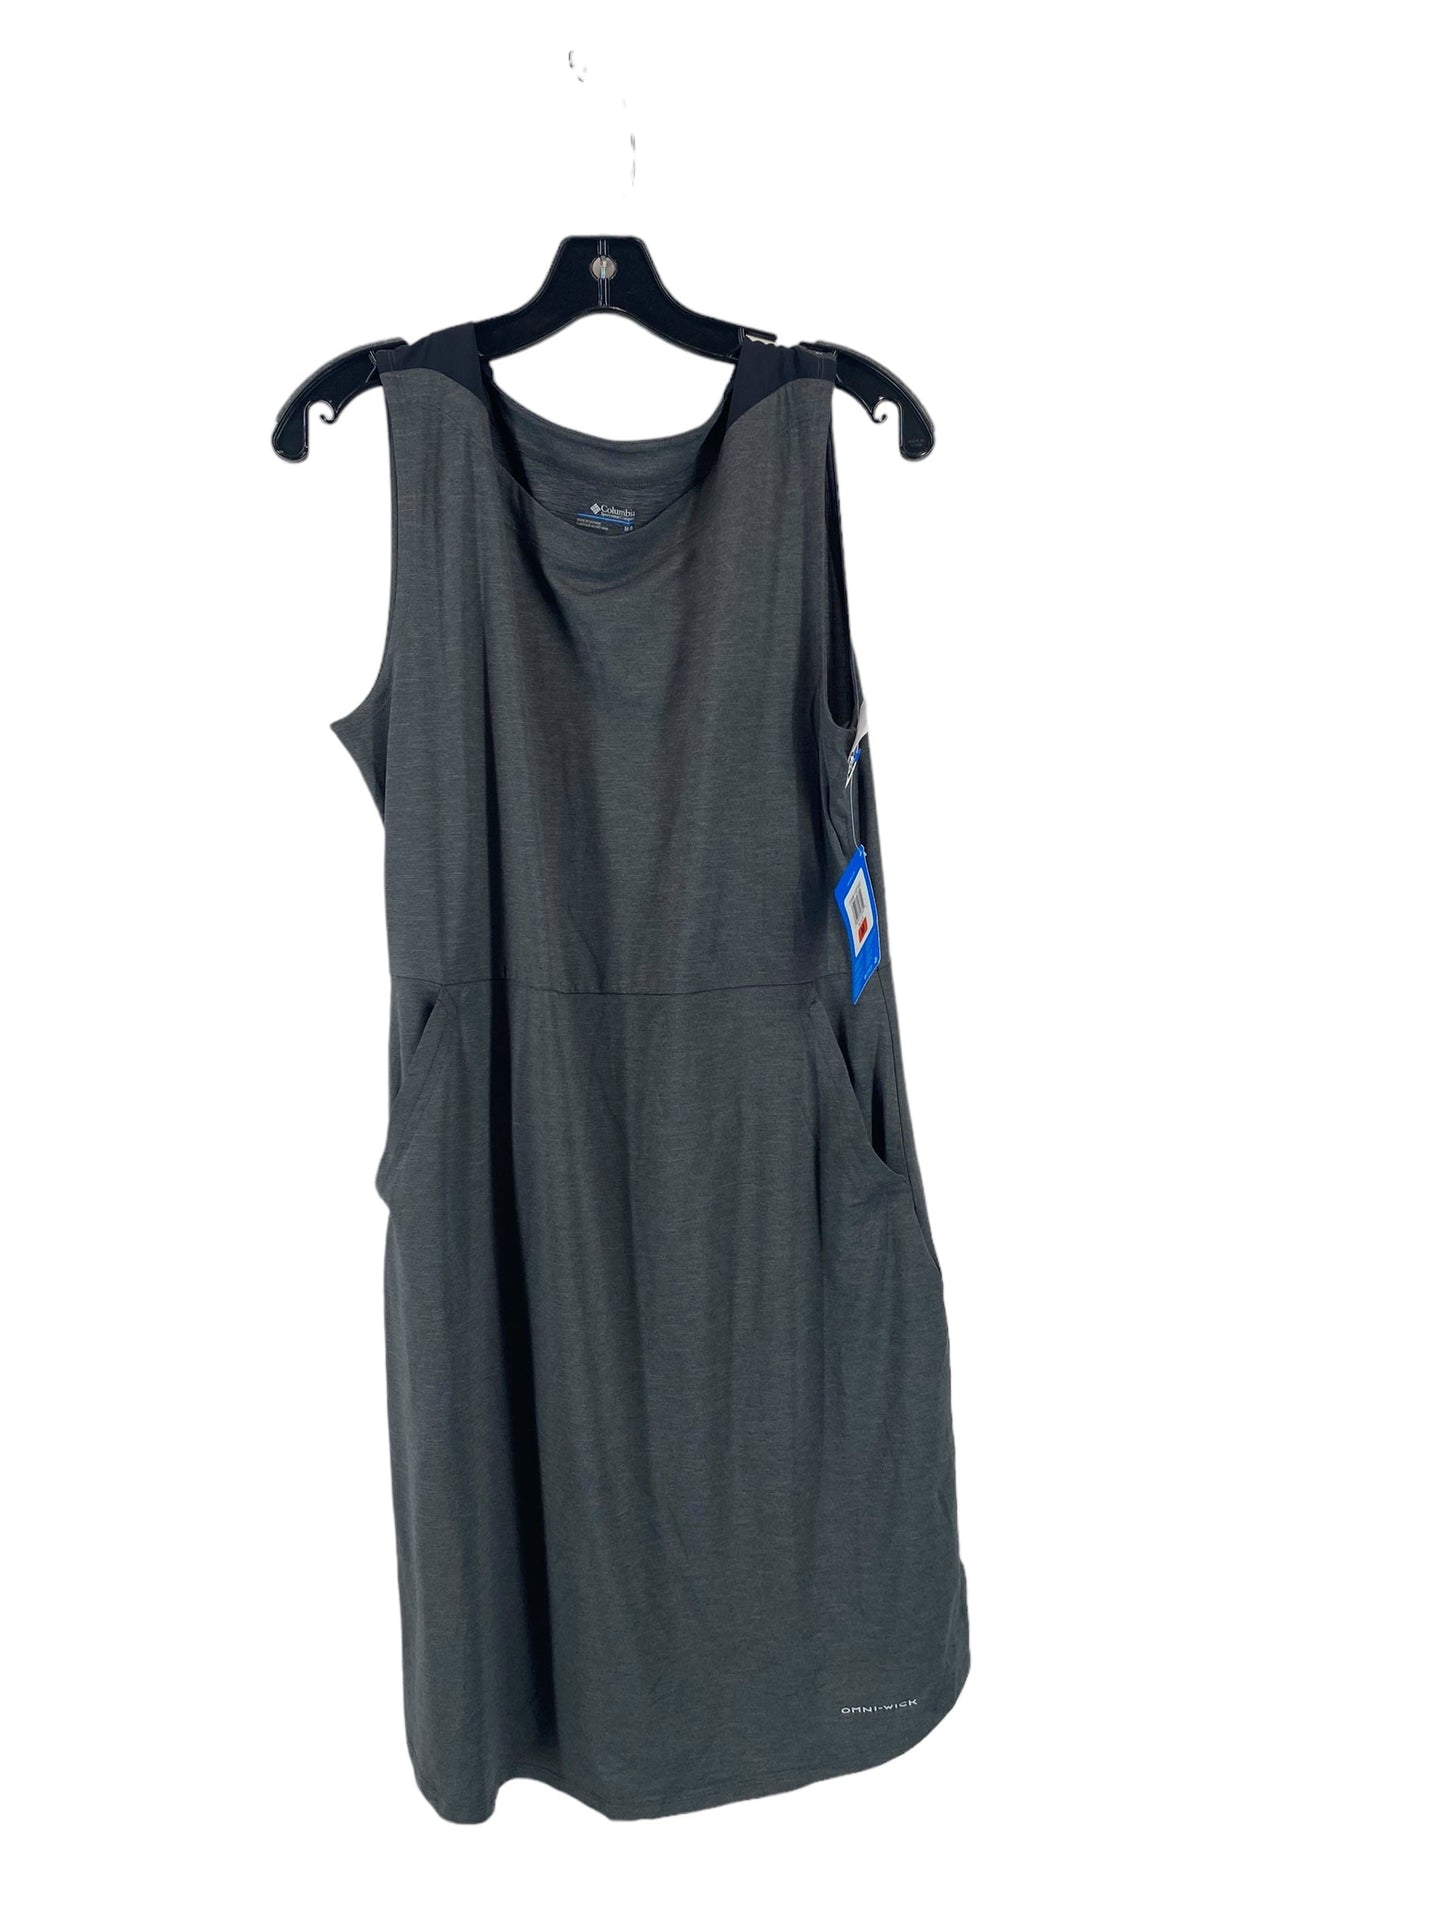 Grey Athletic Dress Columbia, Size M